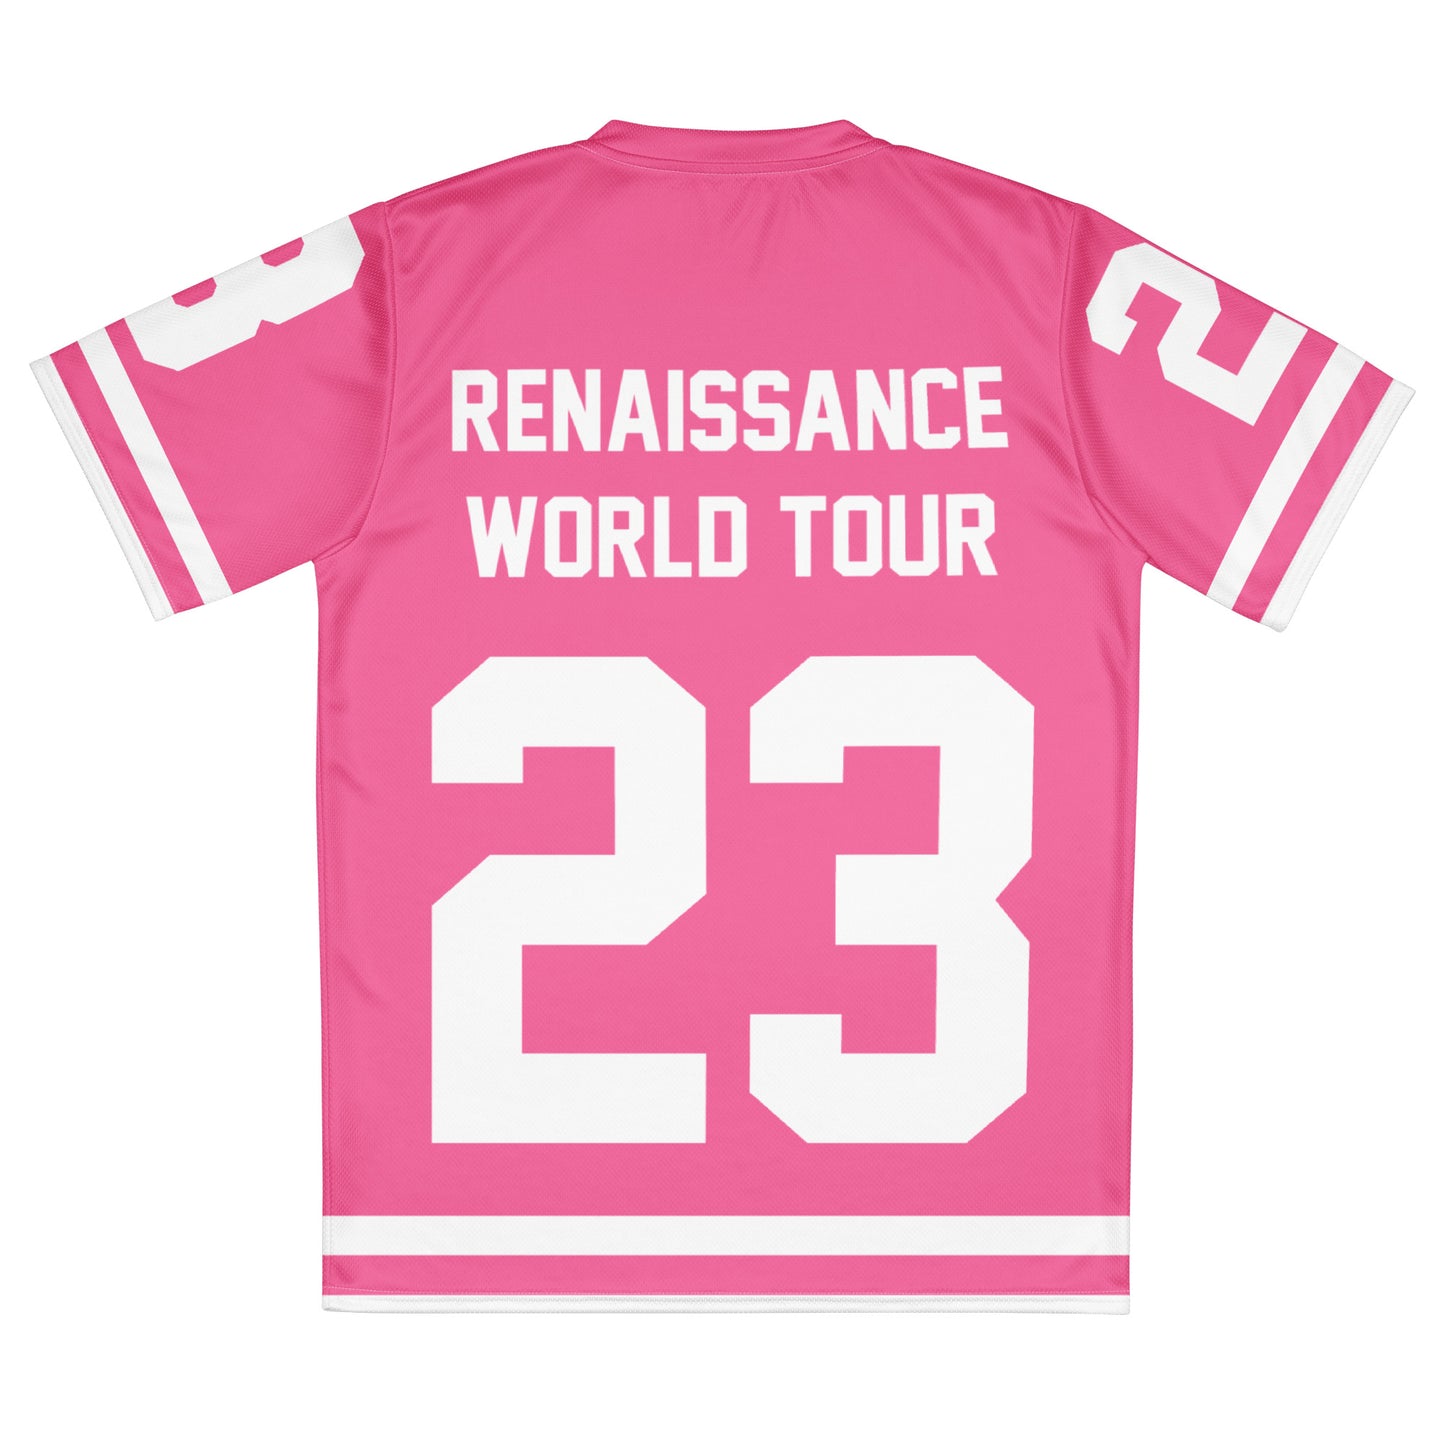 Renaissance World Tour Jersey | Renaissance Tour Jersey